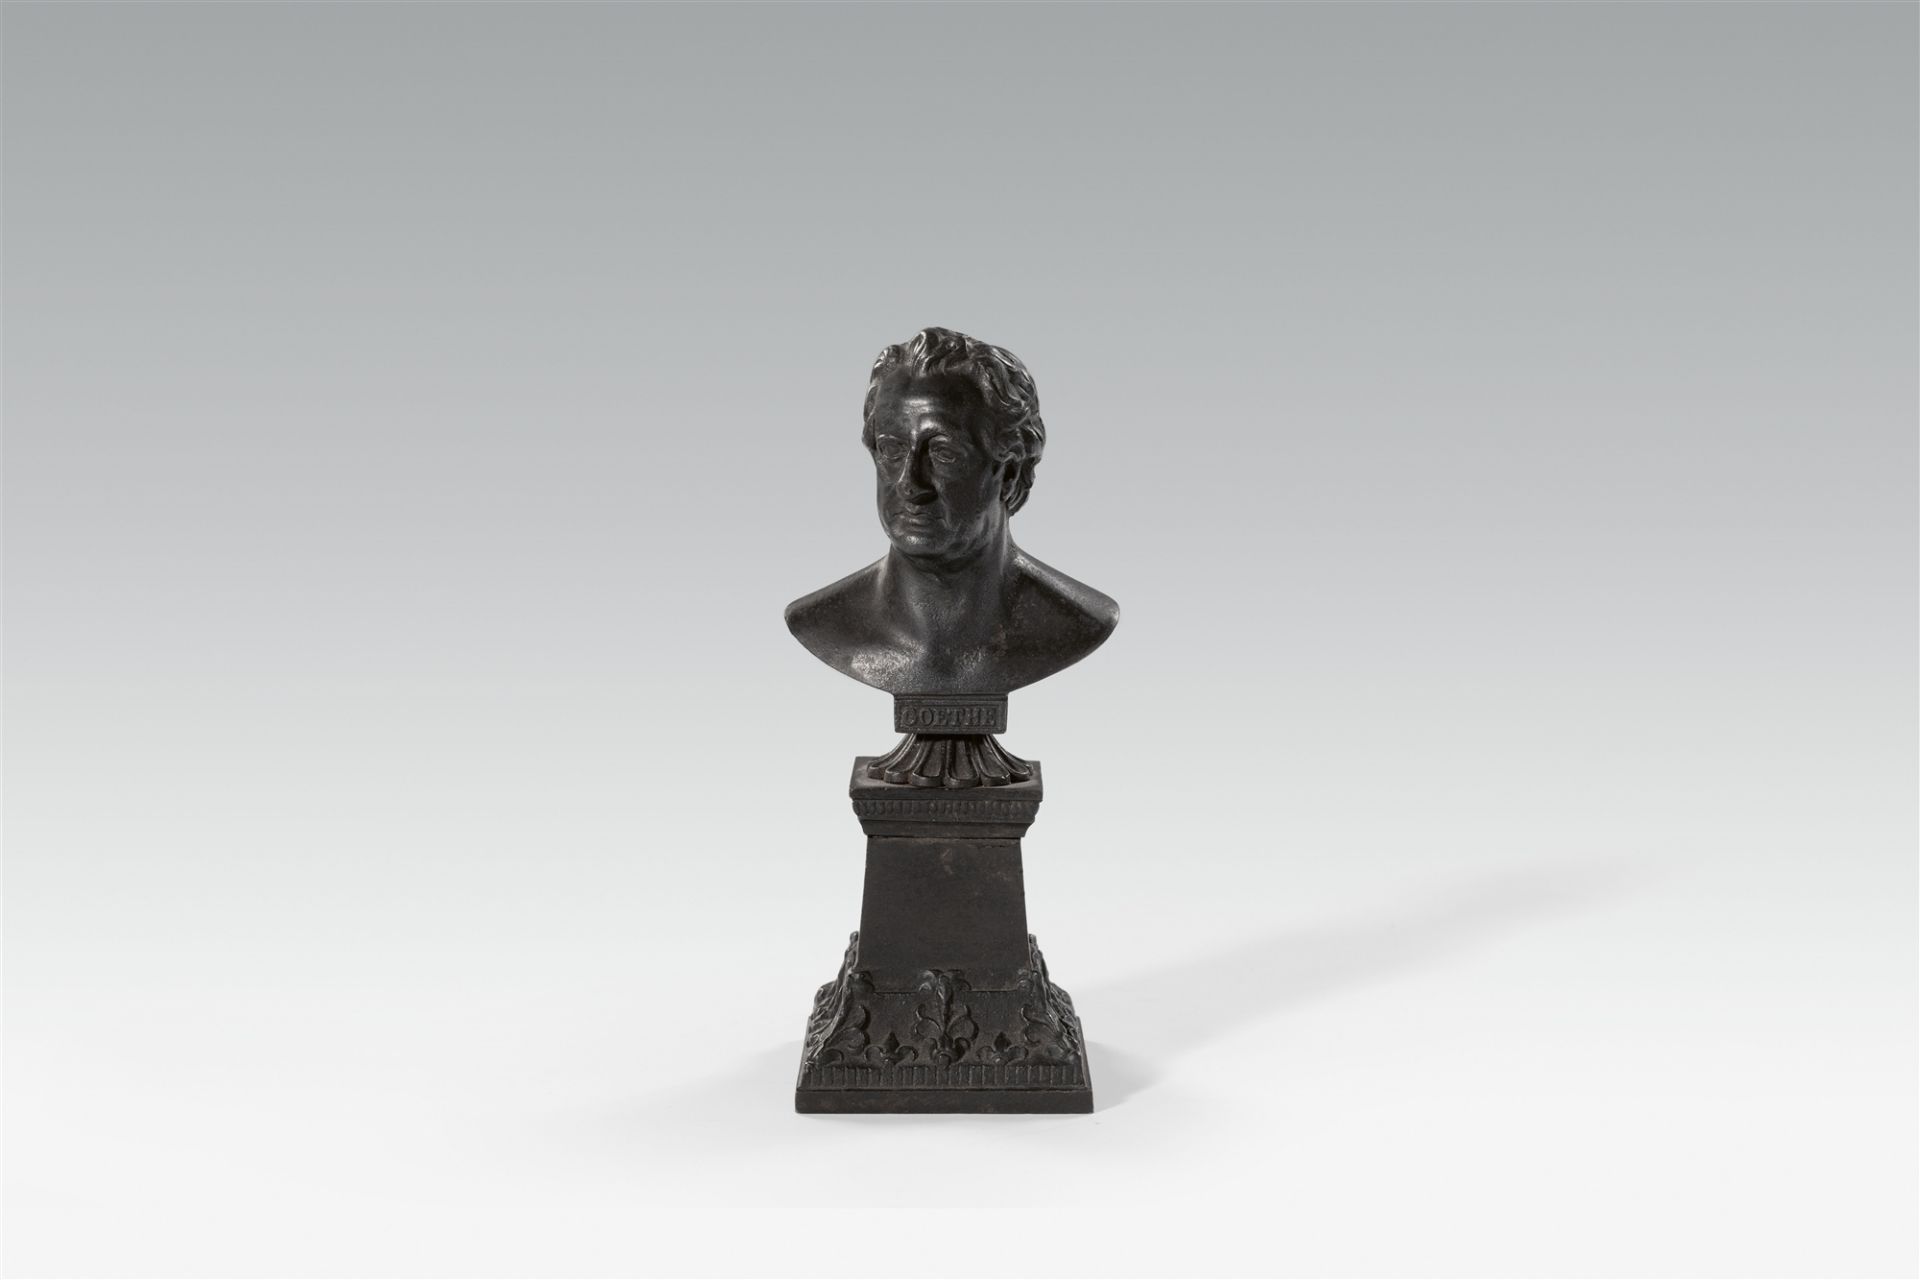 A cast iron bust of Goethe on a plinth